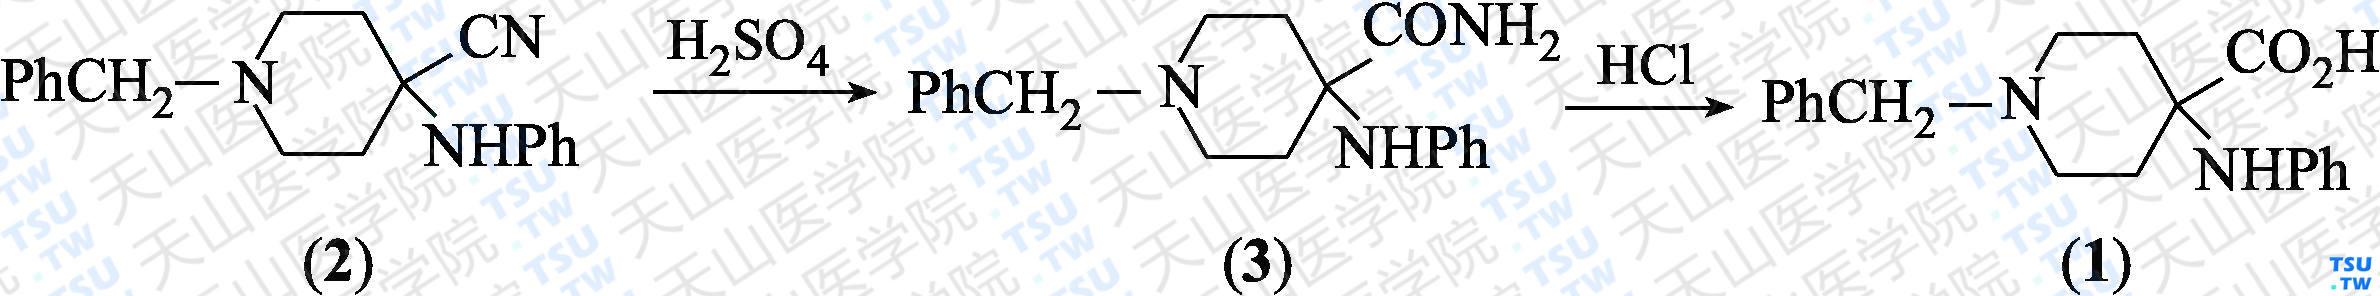 4-苯氨基-1-苄基-4-哌啶羧酸（分子式：C<sub>19</sub>H<sub>22</sub>N<sub>2</sub>O<sub>2</sub>）的合成方法路线及其结构式